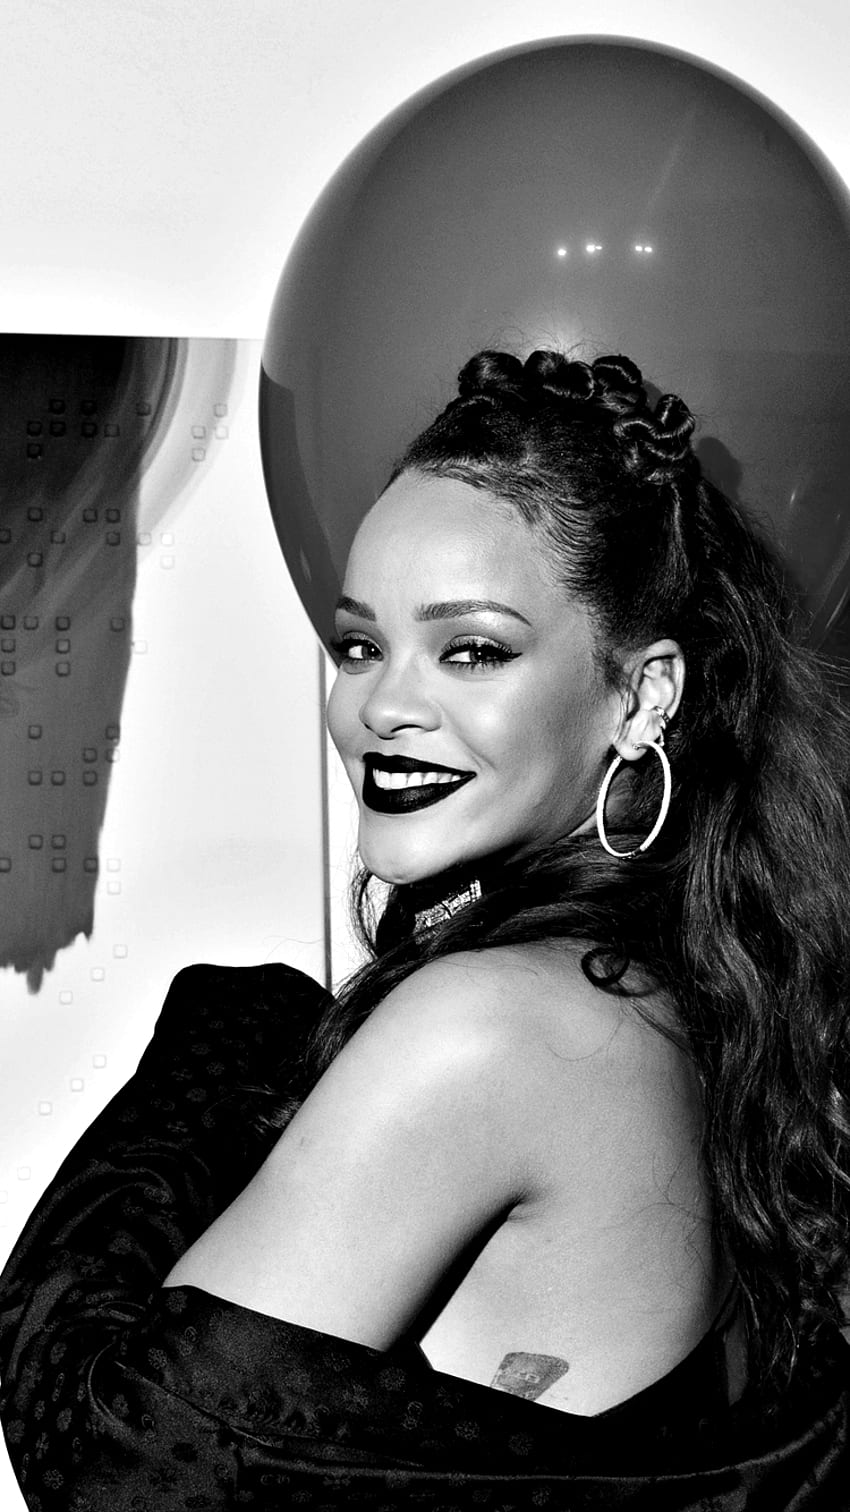 A woman with black lipstick and big earrings - Rihanna